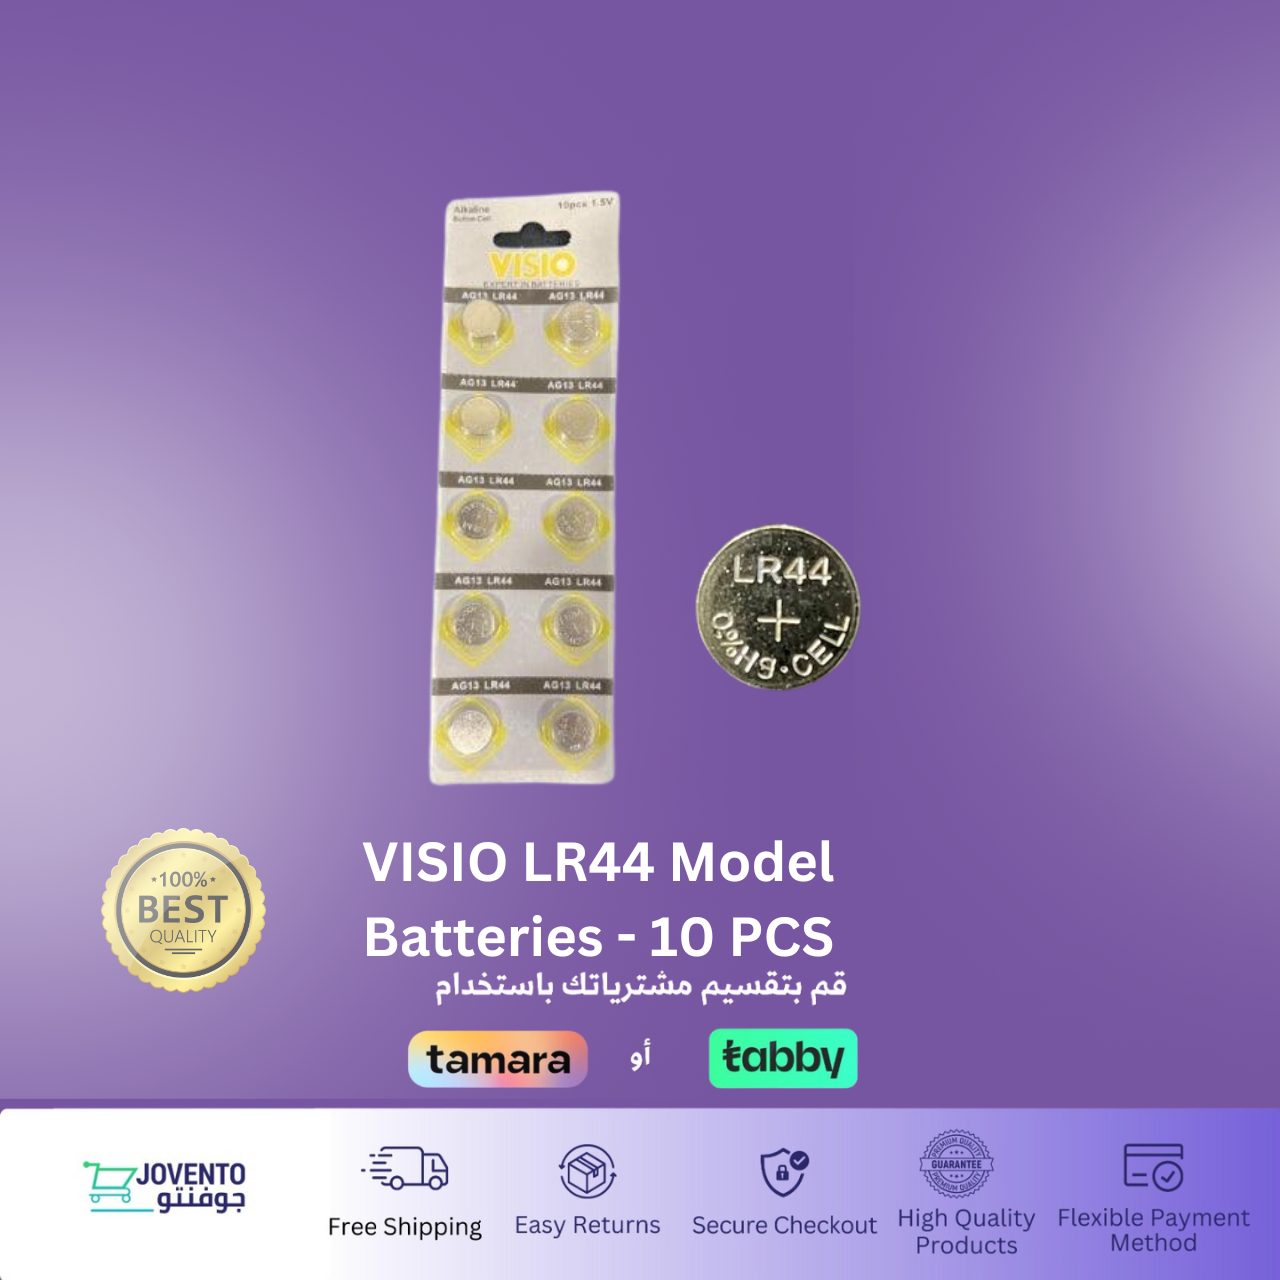 VISIO LR44 Model Batteries - 10 PCS